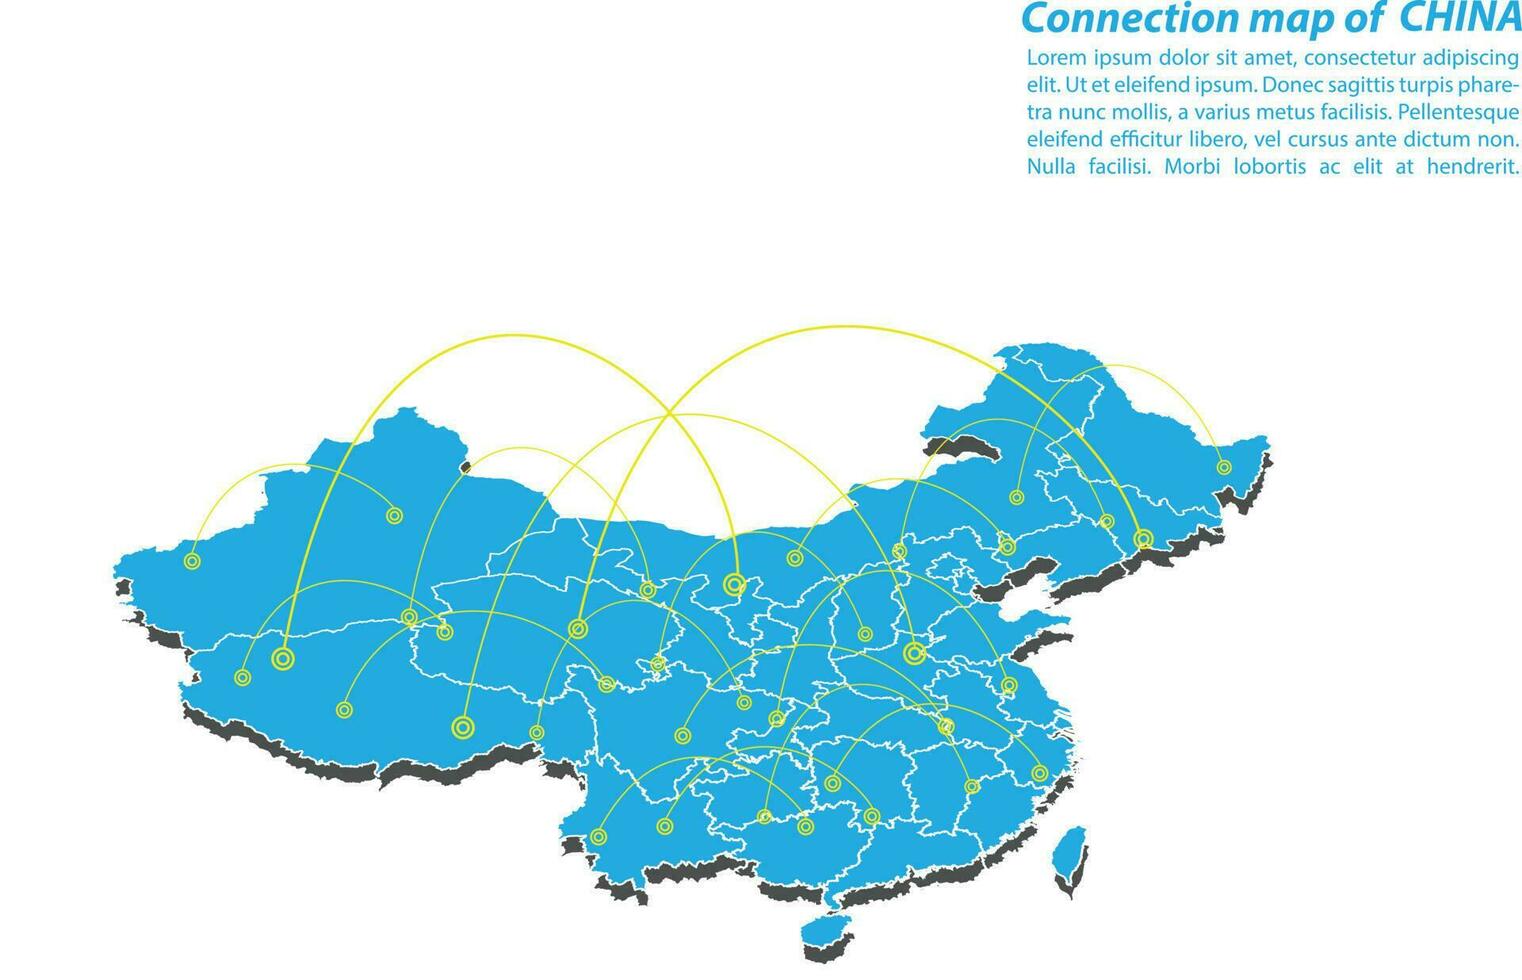 Modern of China Map Connections Network Design, bestes Internetkonzept des China Map Business aus Concepts Series, Map Point und Line Composition. Infografik-Karte. Vektor-Illustration. vektor